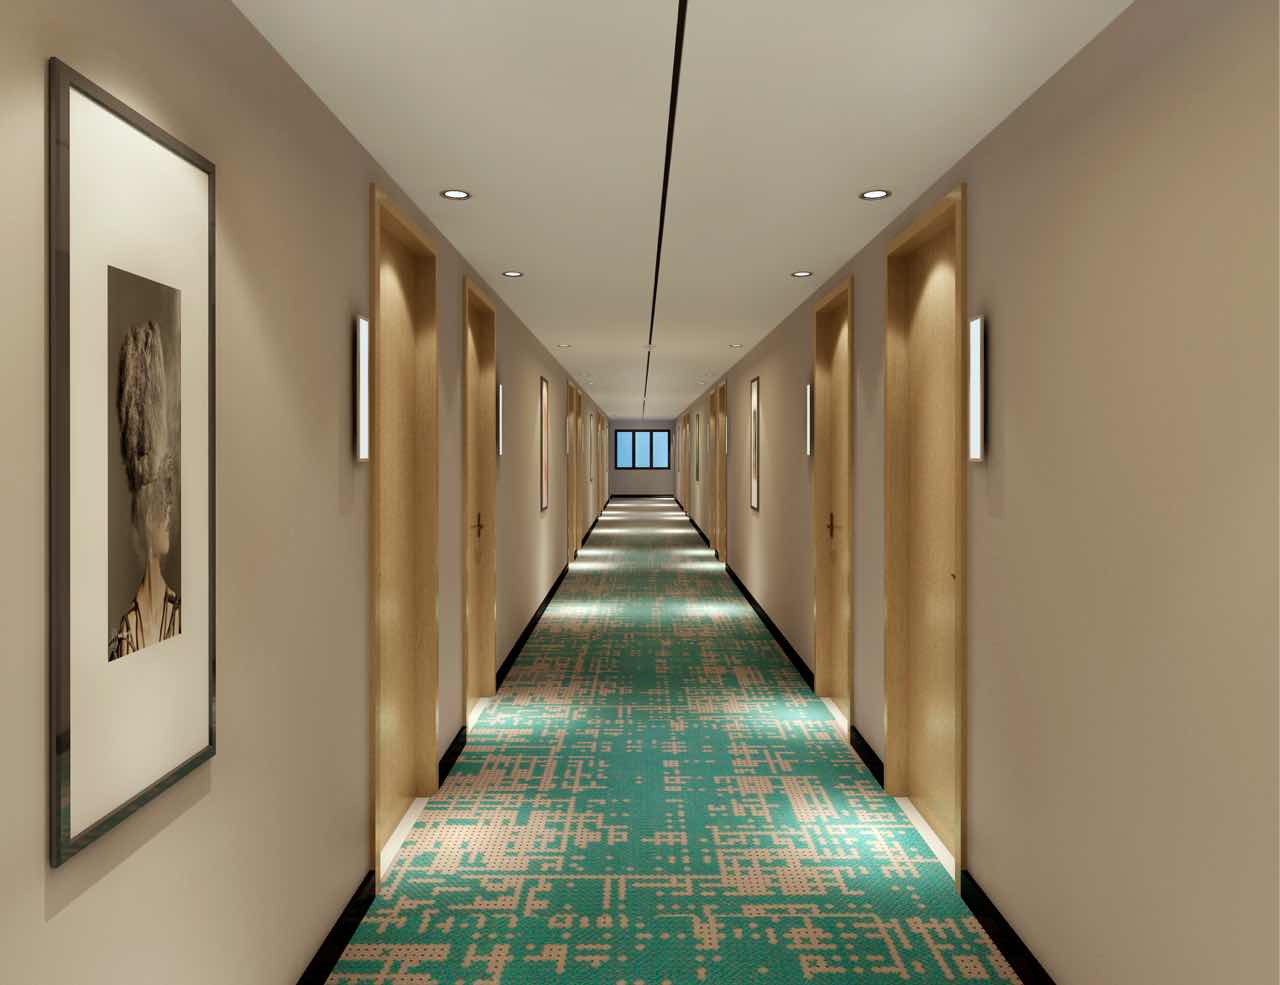 2018 Simple Color Design Corridor Carpet For hotel, Wilton ...